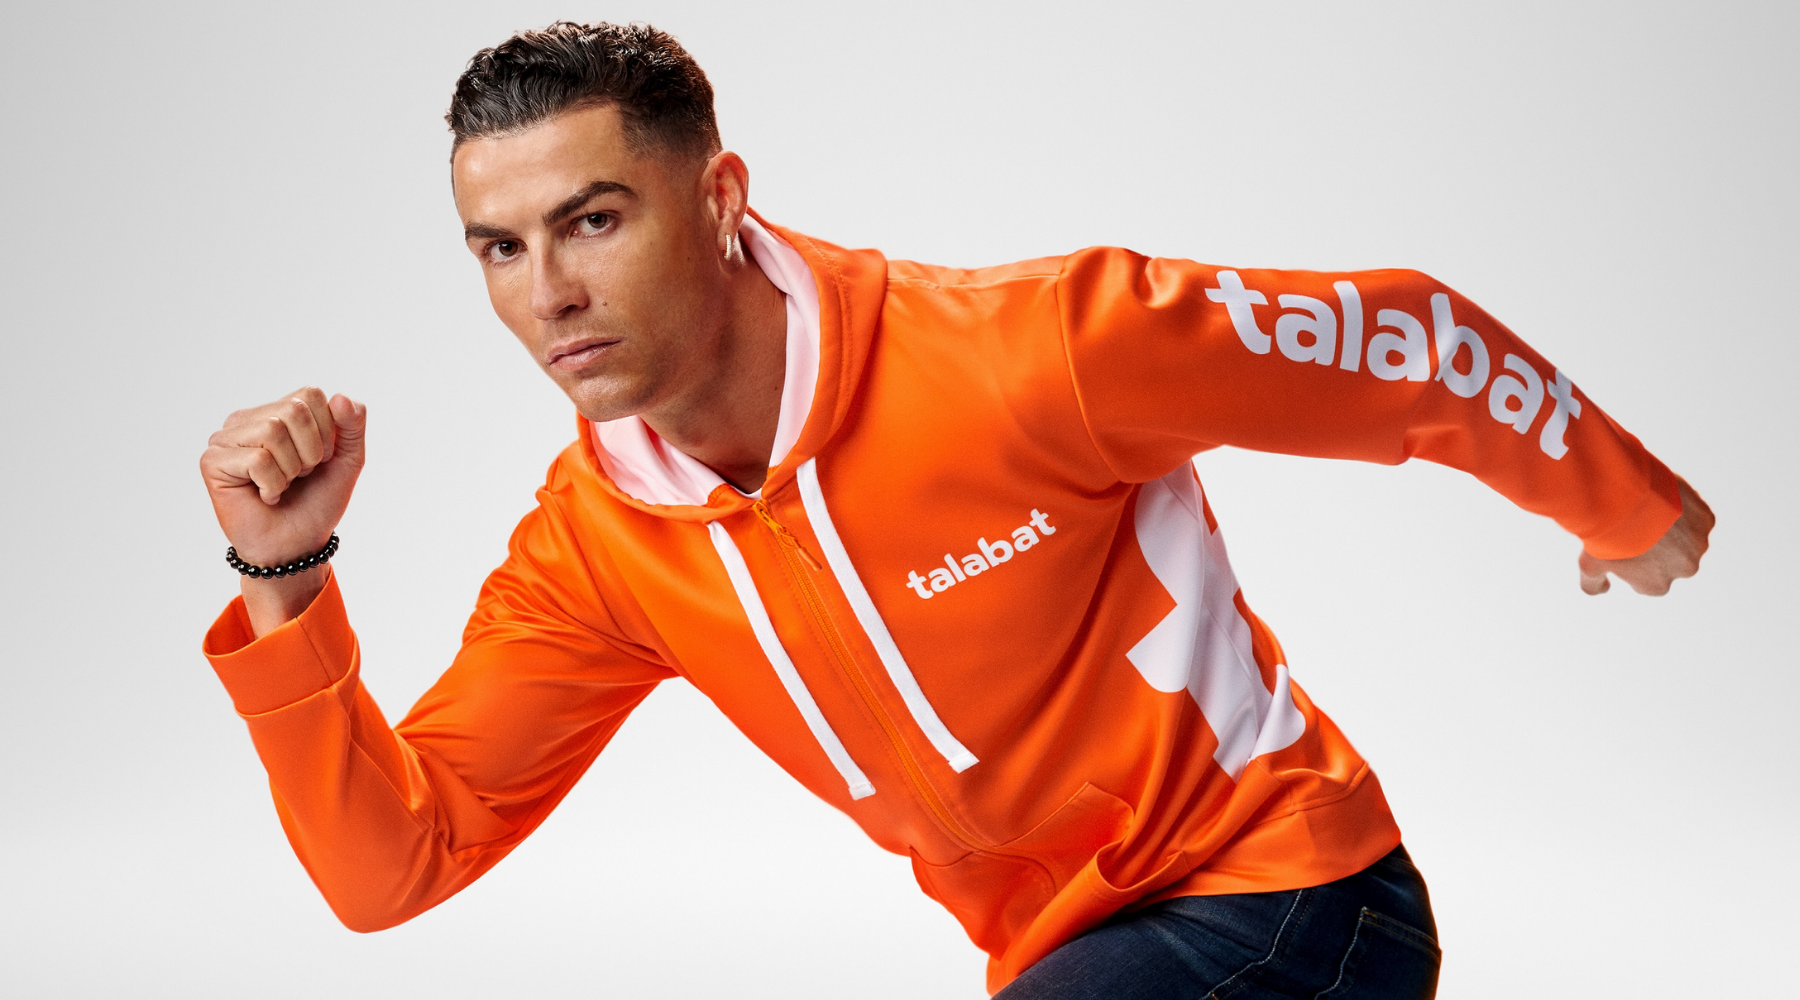 Talabat announces Cristiano Ronaldo as Official Brand Ambassador